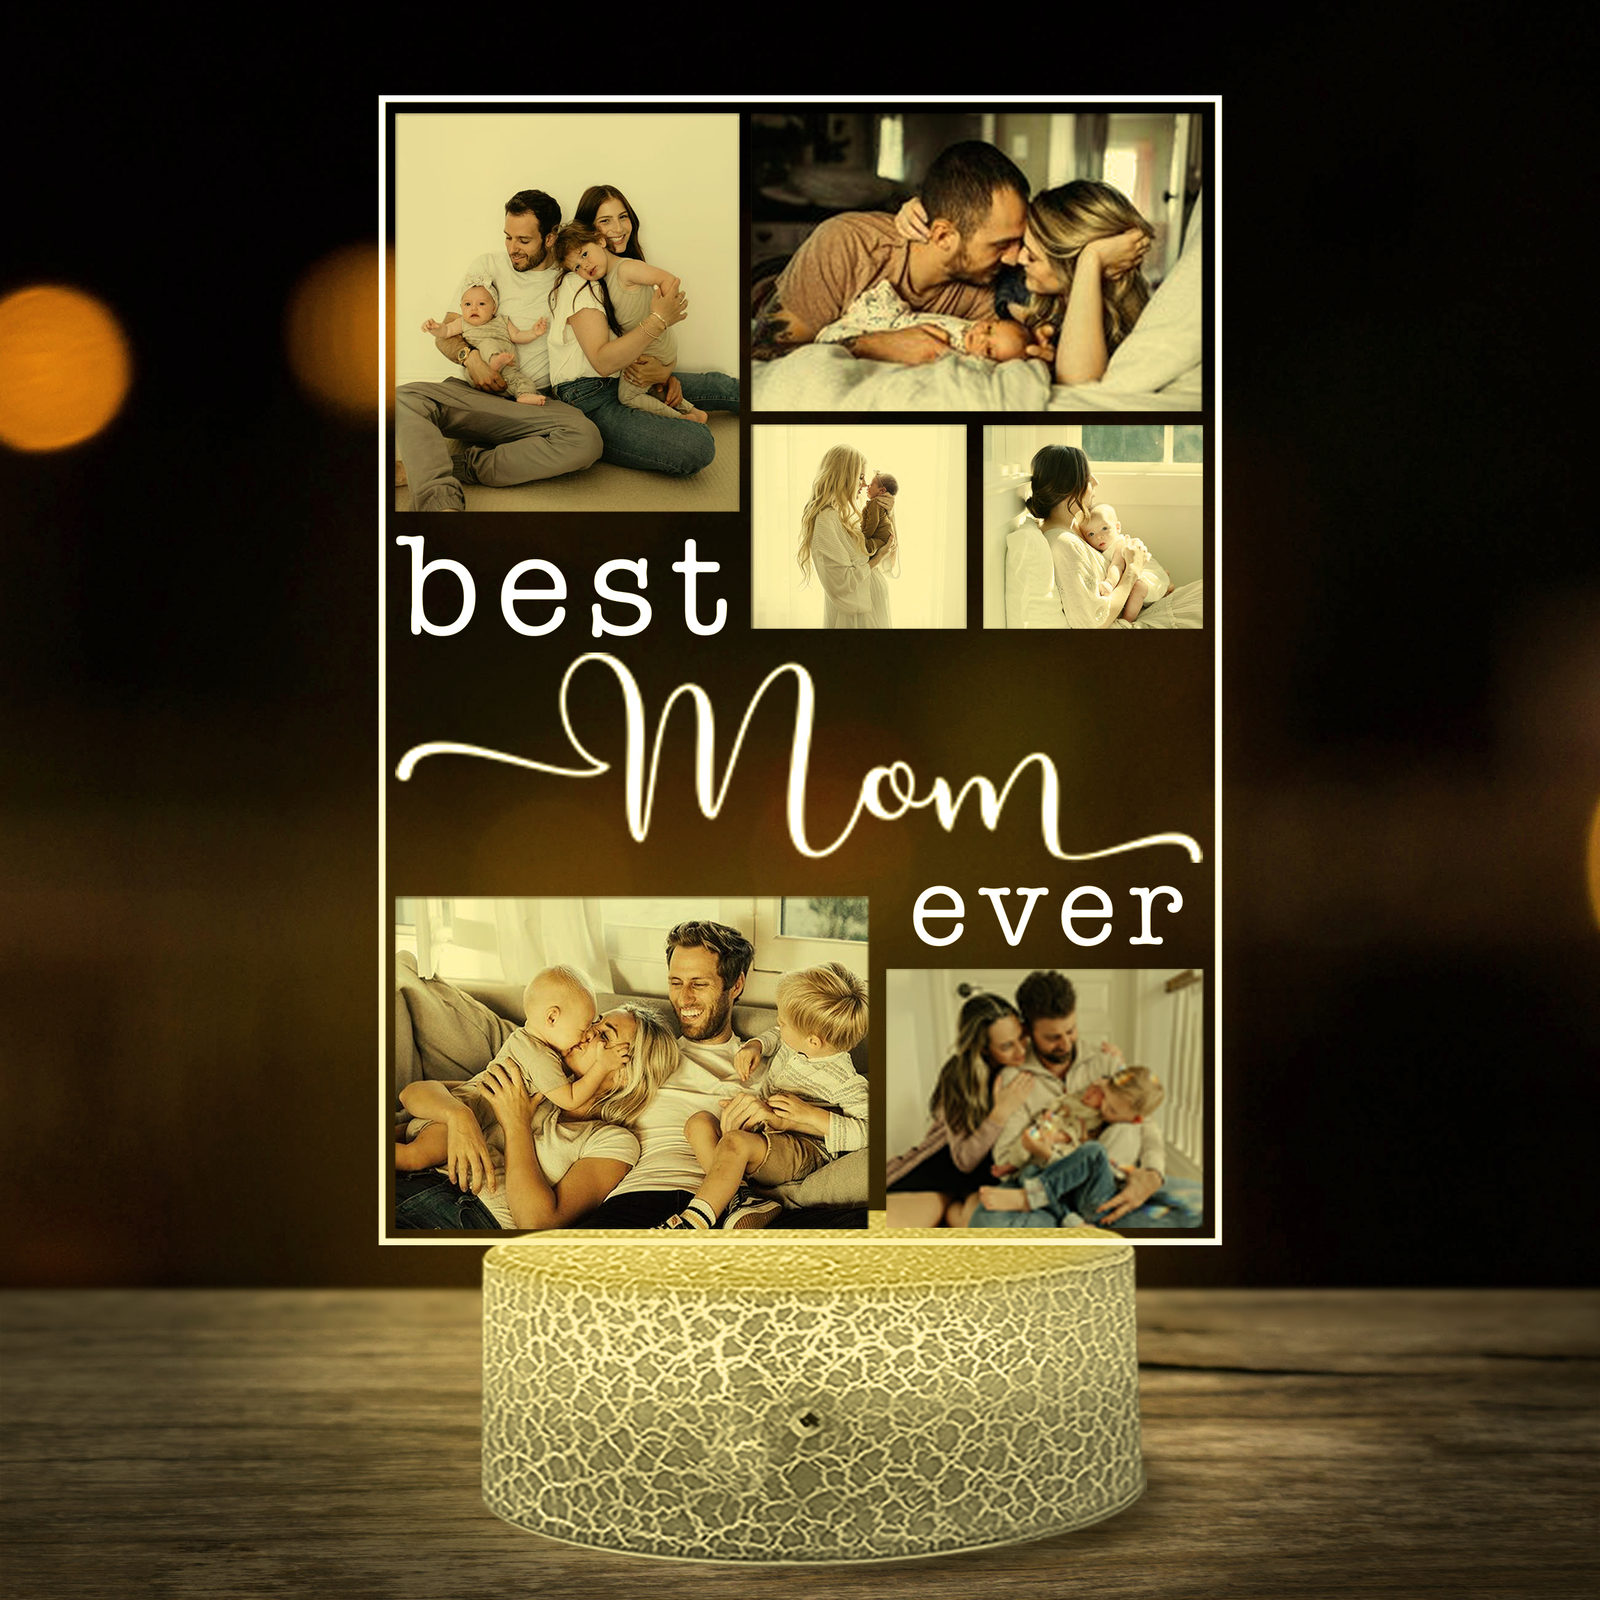 Best Mom Ever Custom Image Personalized Night Light Gift For Mom